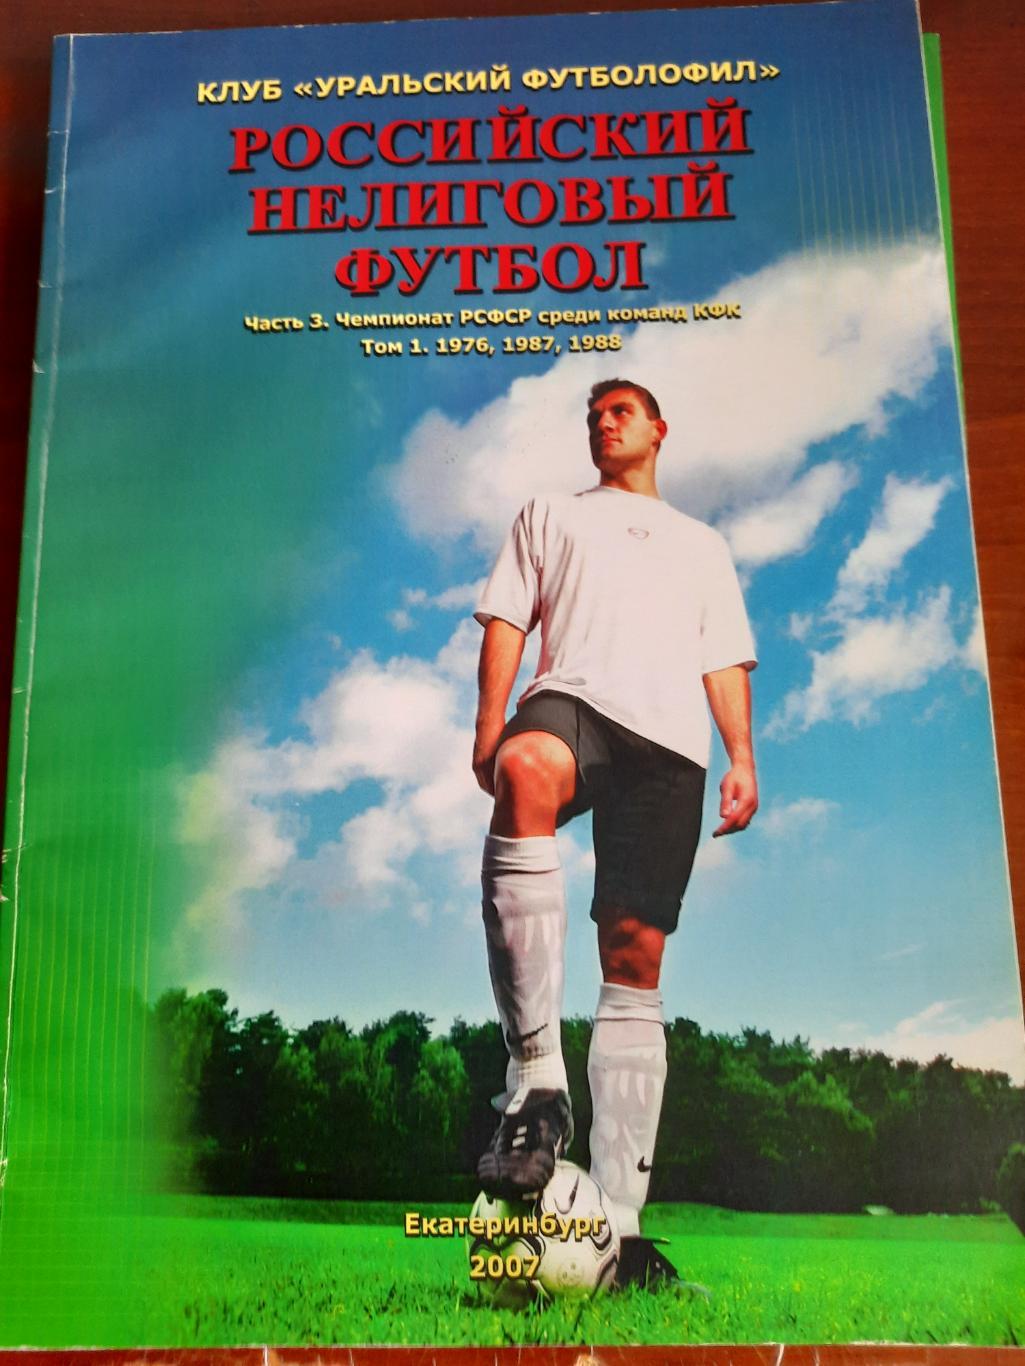 Чемпионат РСФСР среди команд КФК 1976, 1987, 1988 (Екатеринбург, 2007)